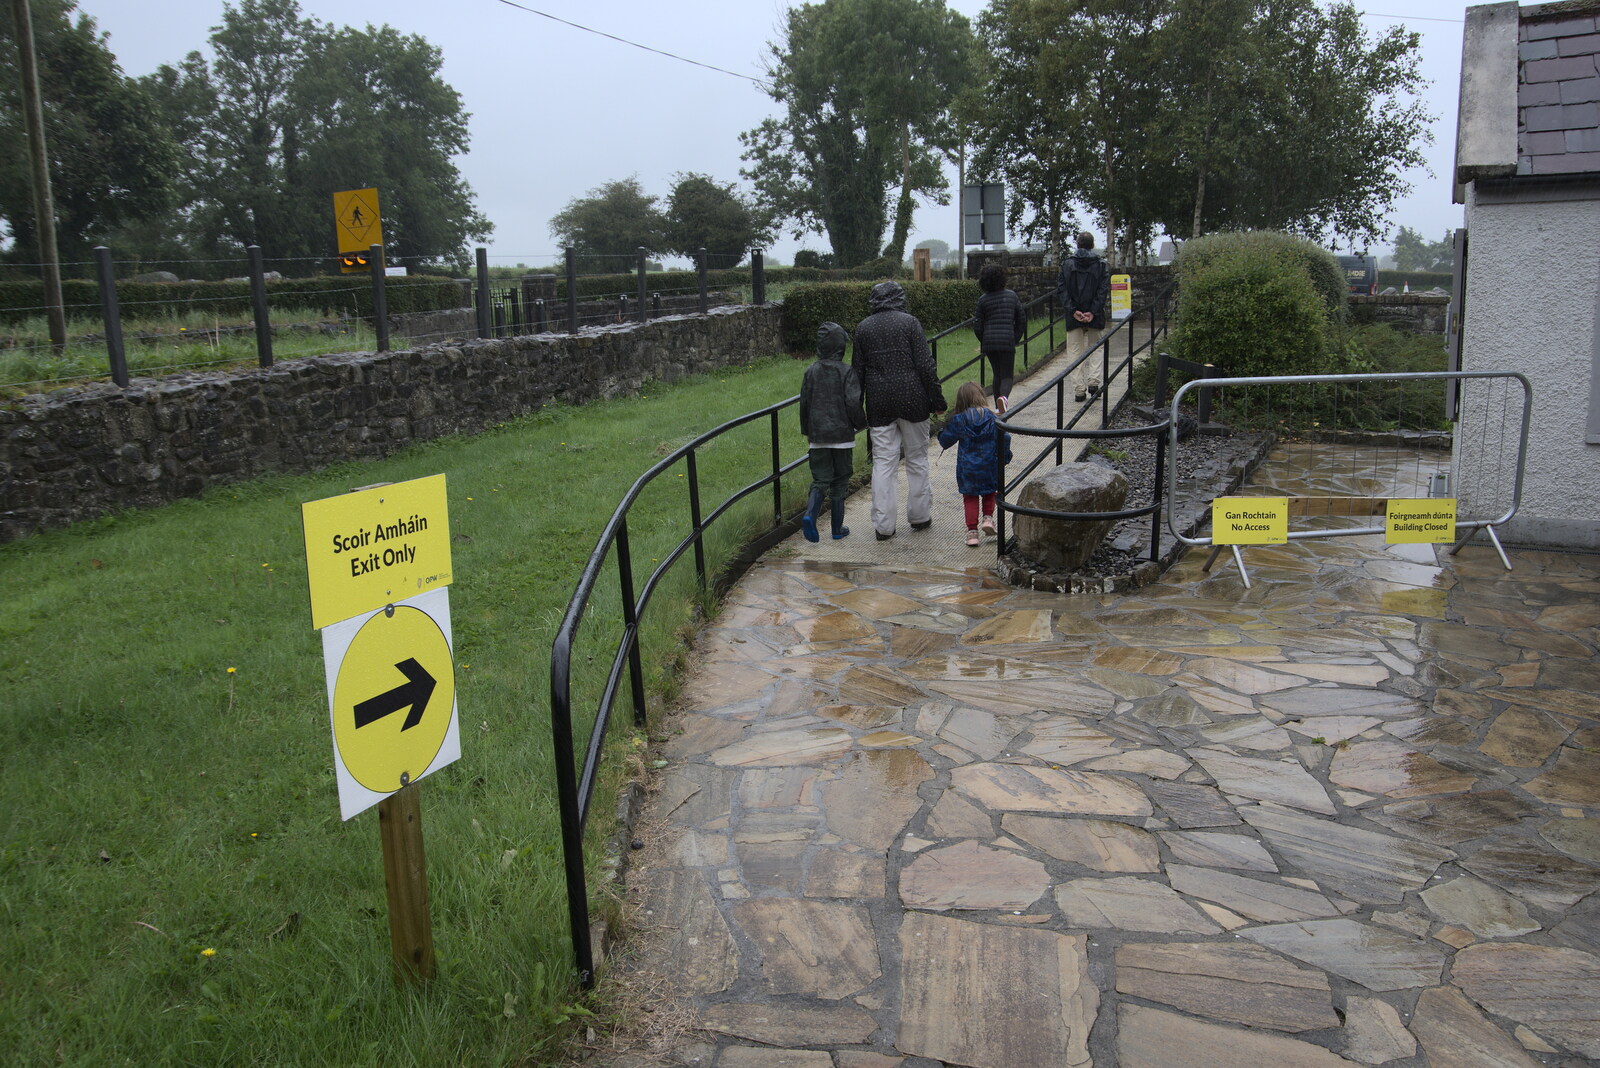 Covid signs from Walks Around Benbulben and Carrowmore, County Sligo, Ireland - 13th August 2021